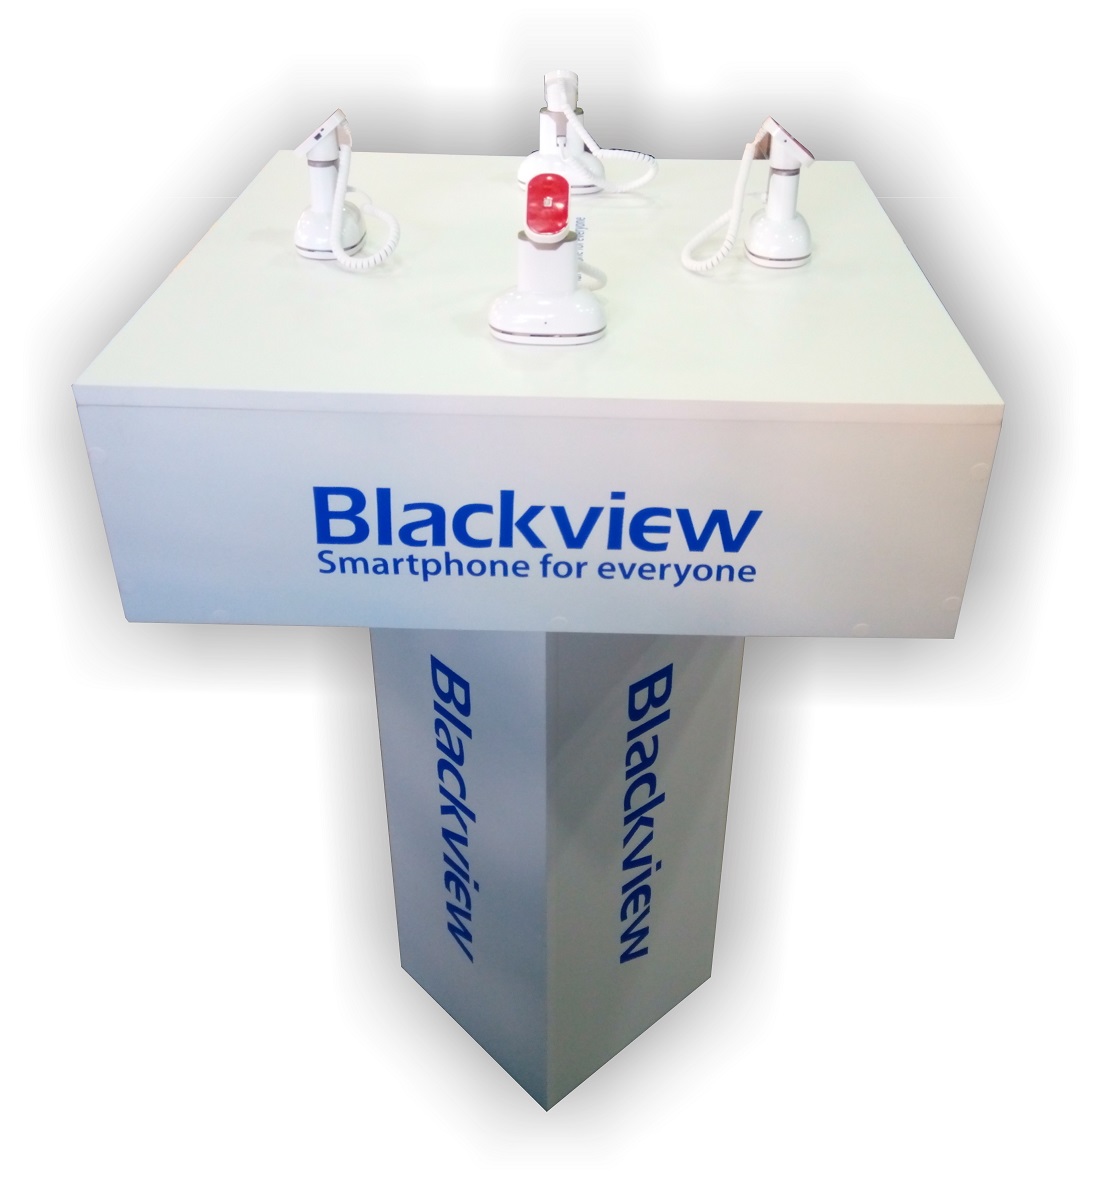 Stand-Blackview-70cm-x-70cm